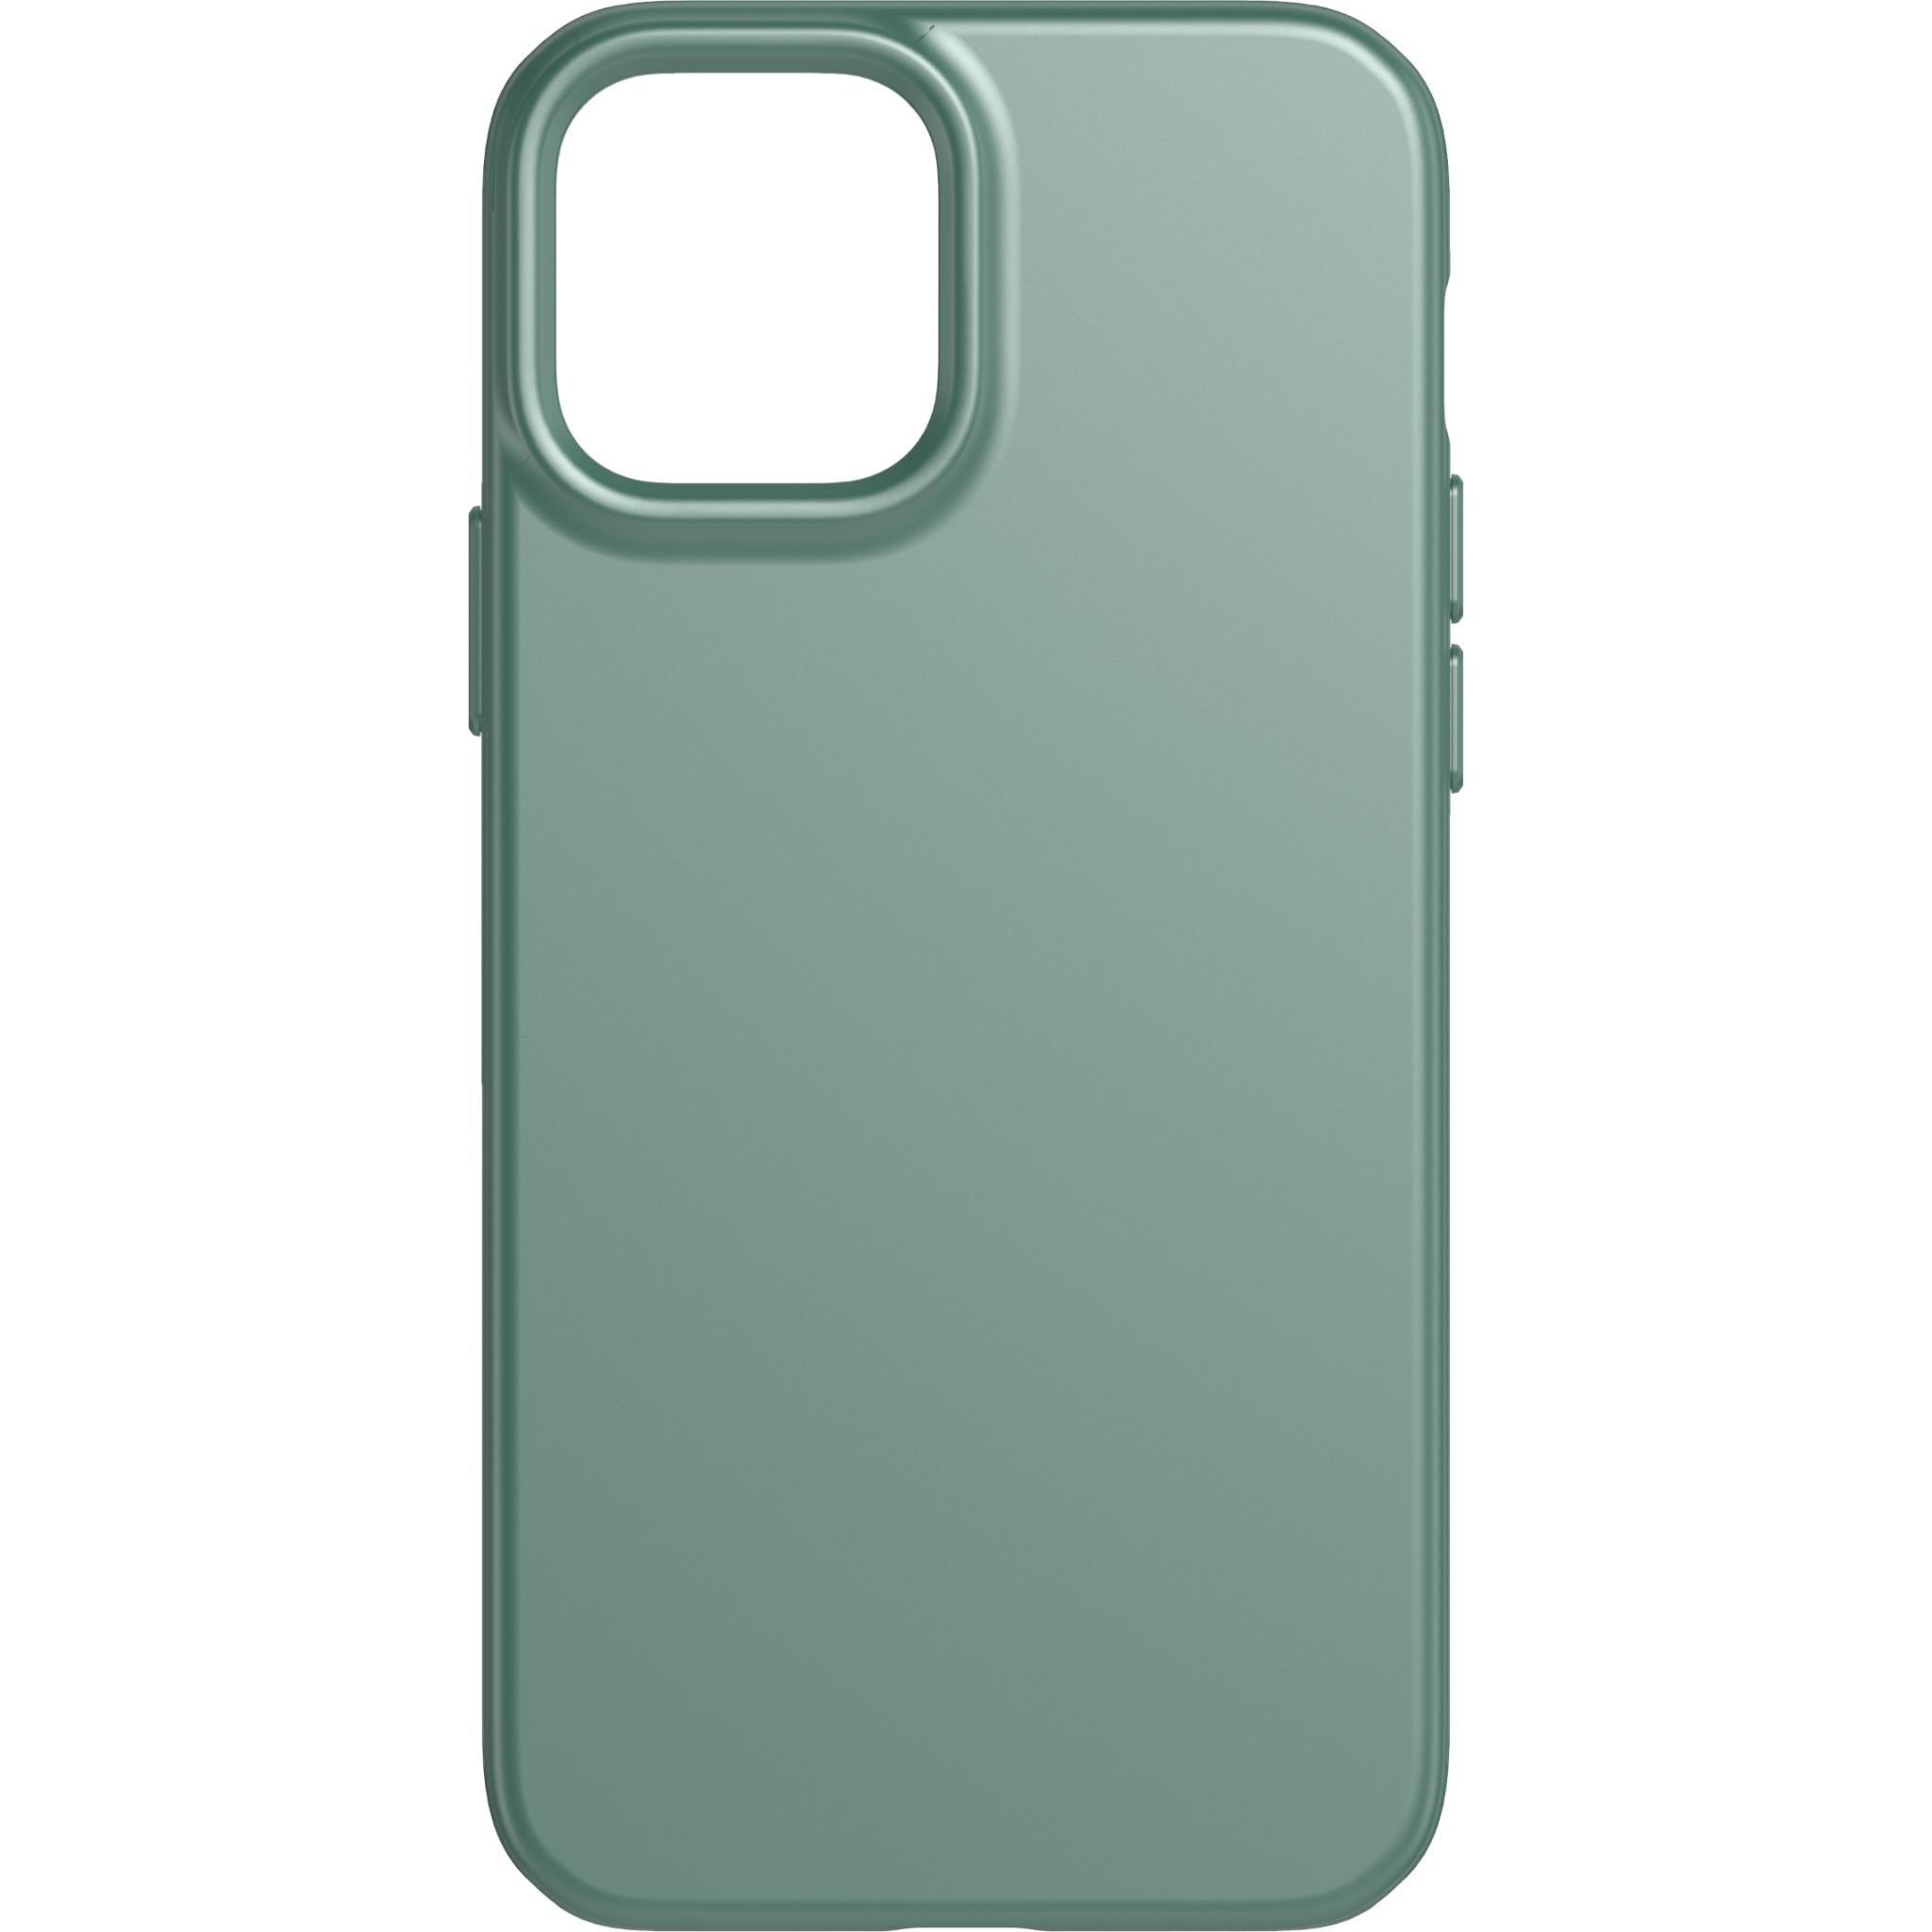 tech21 evo slim case for iphone 12/12 pro (green)